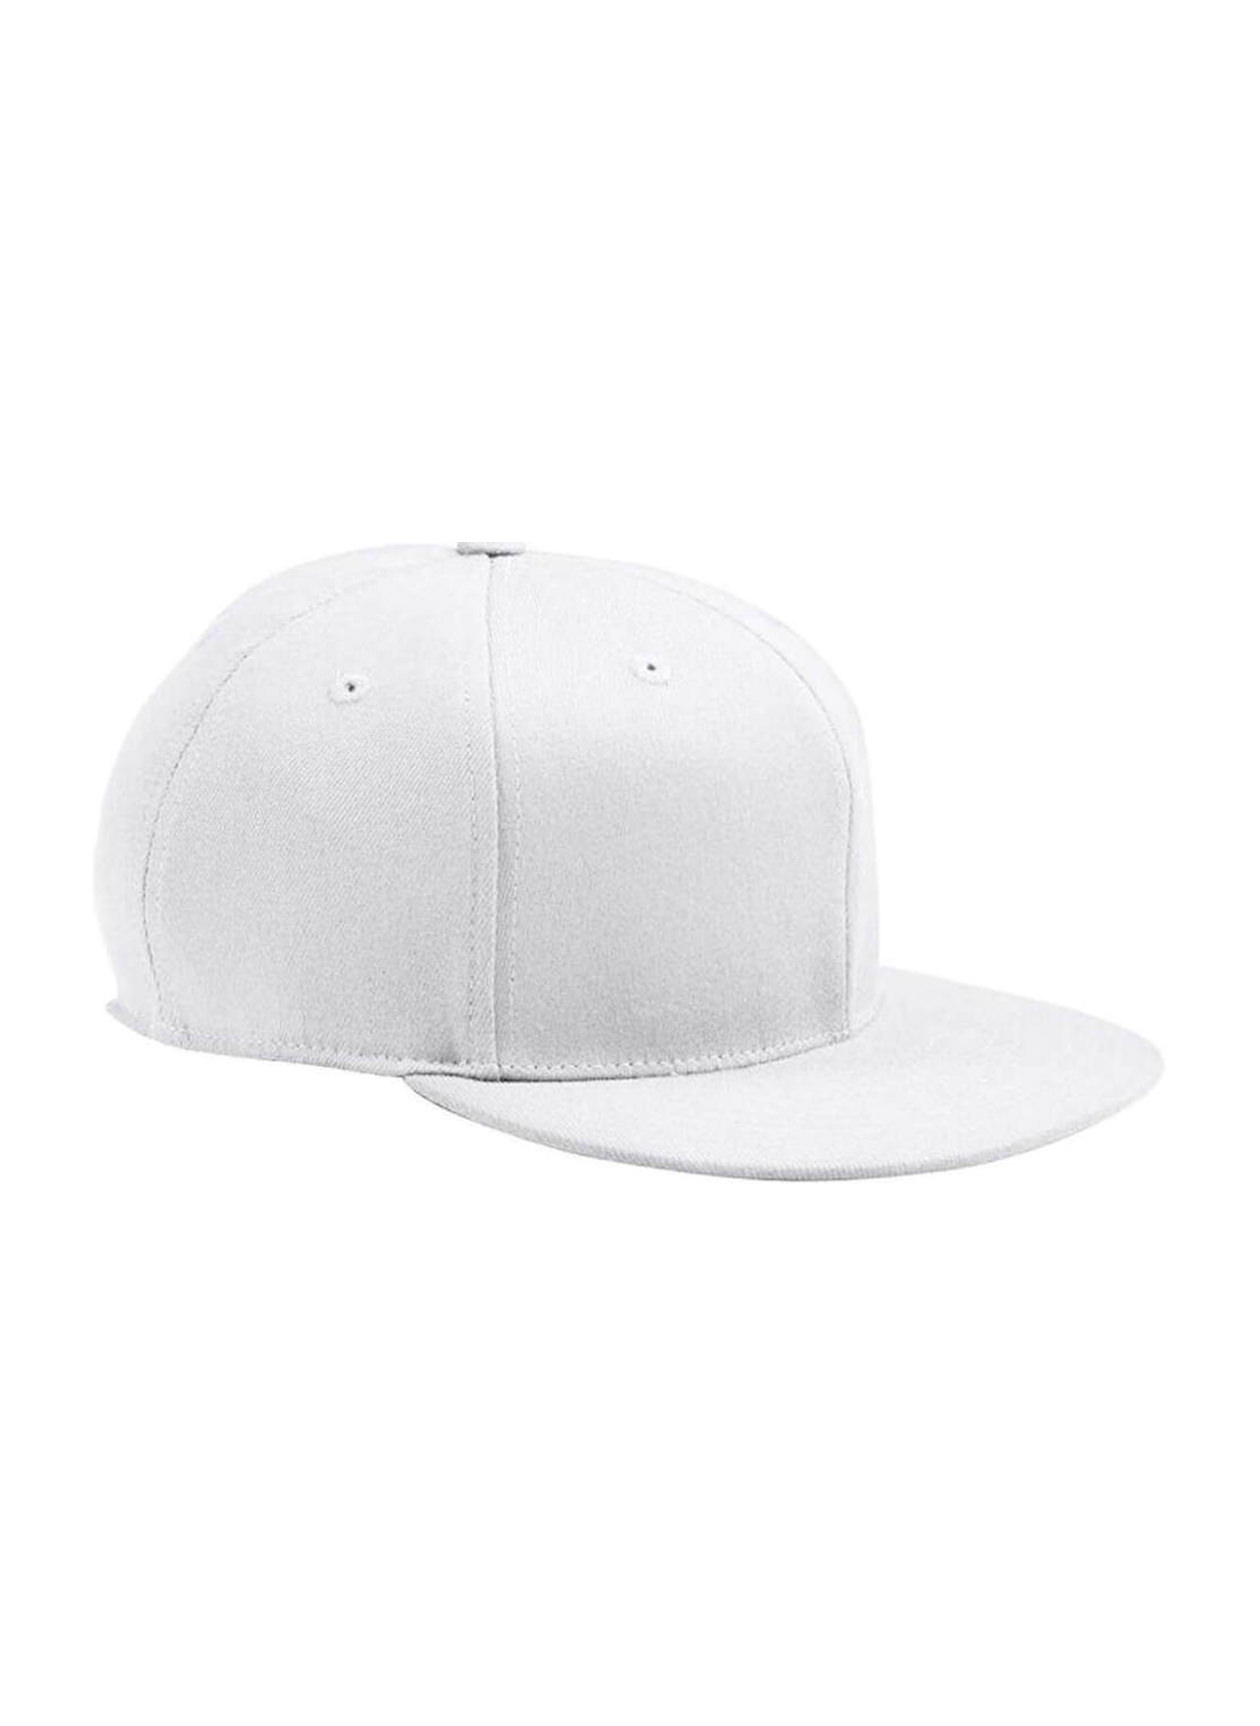 White Flexfit Premium 210 Fitted Hat | Flexfit | Flex Caps